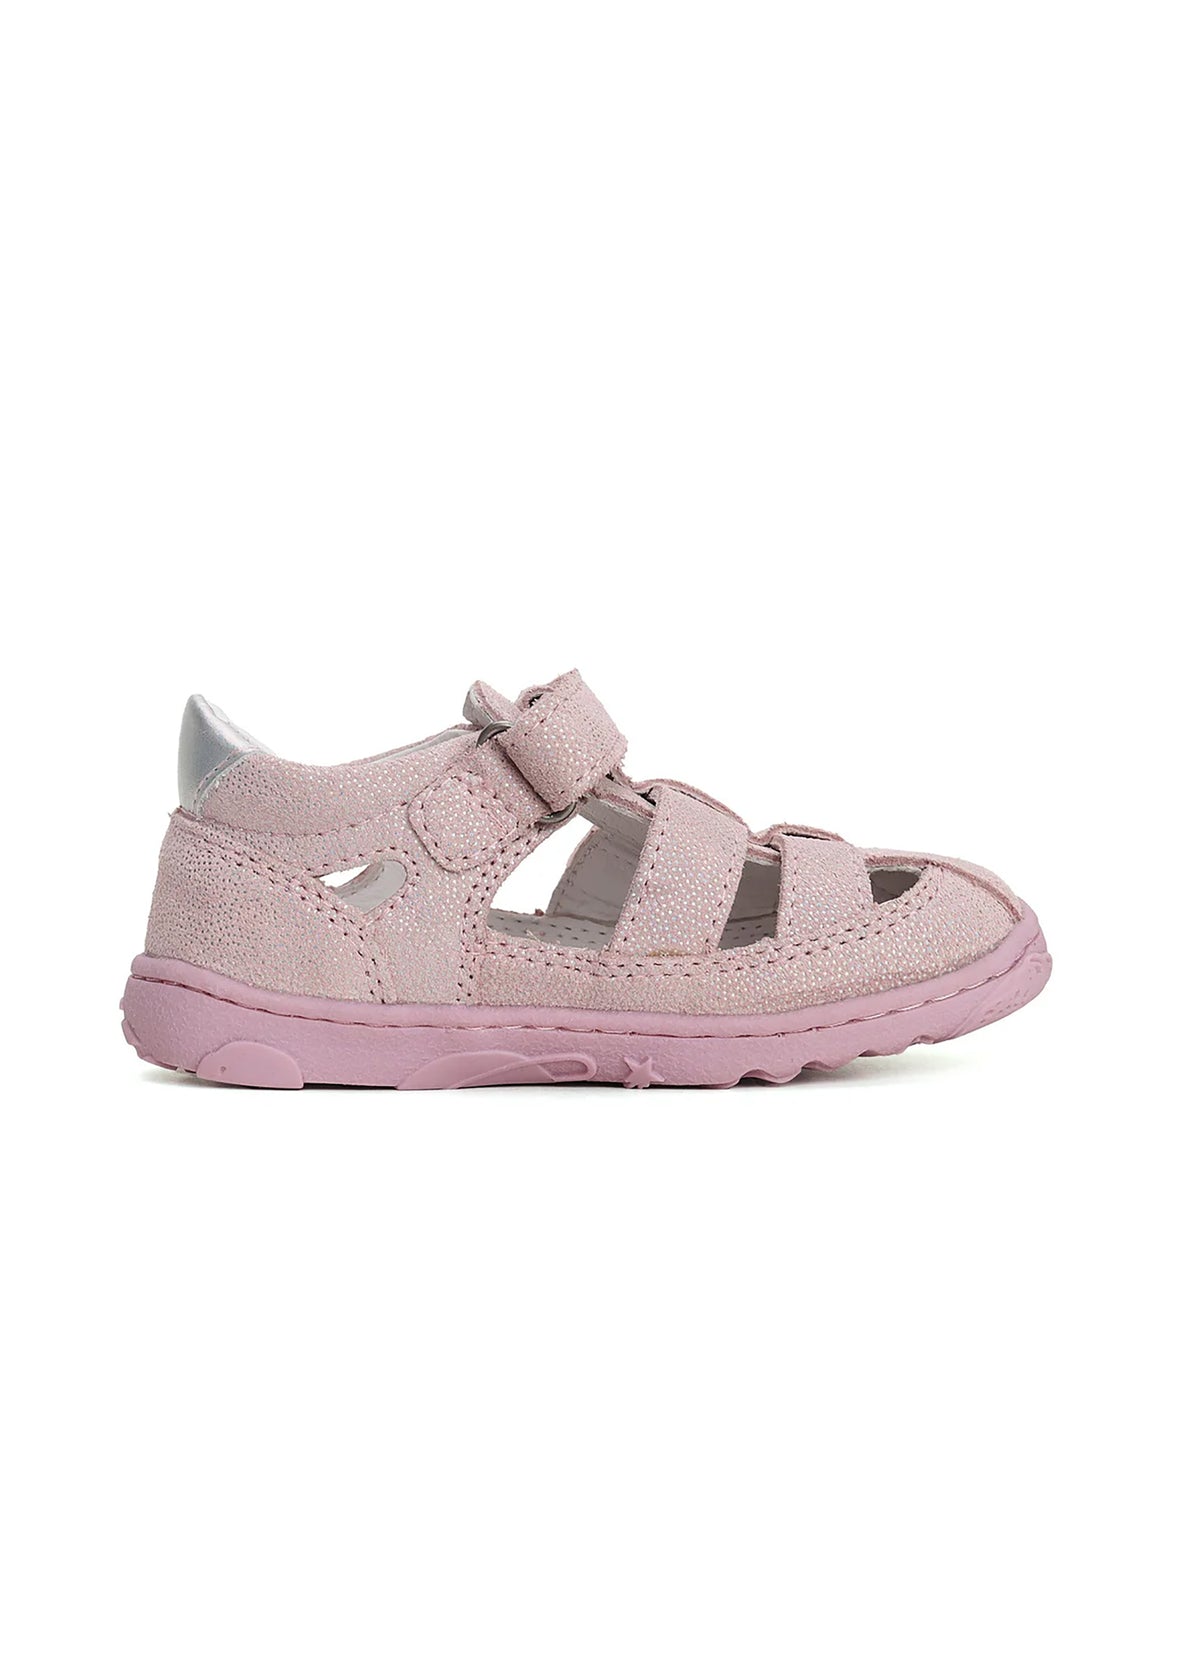 Kids' Barefoot Sandals - Pink Sparkling Leather